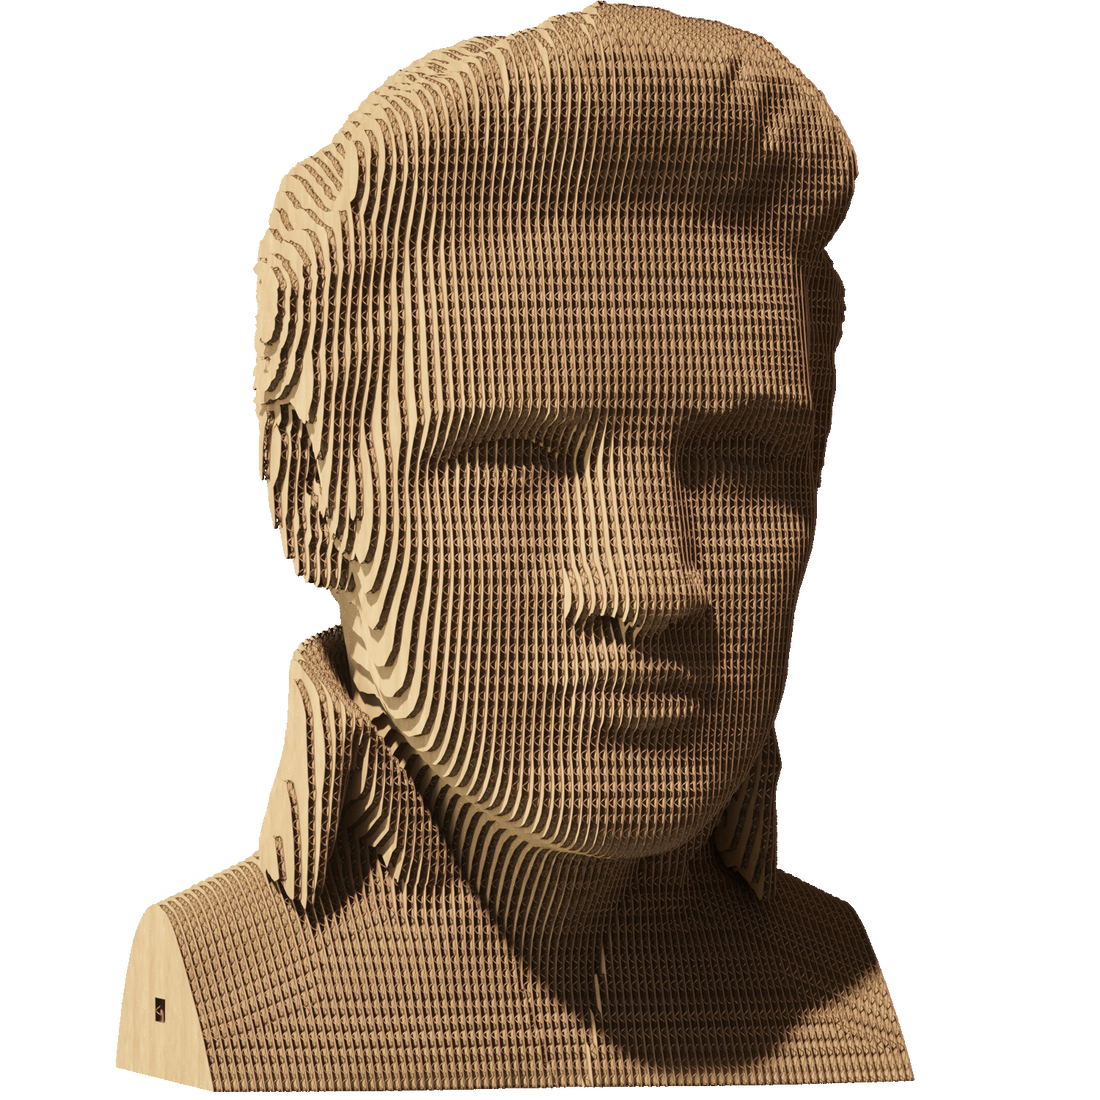 ELVIS PRESLEY 3D Puzzle by Cartonic